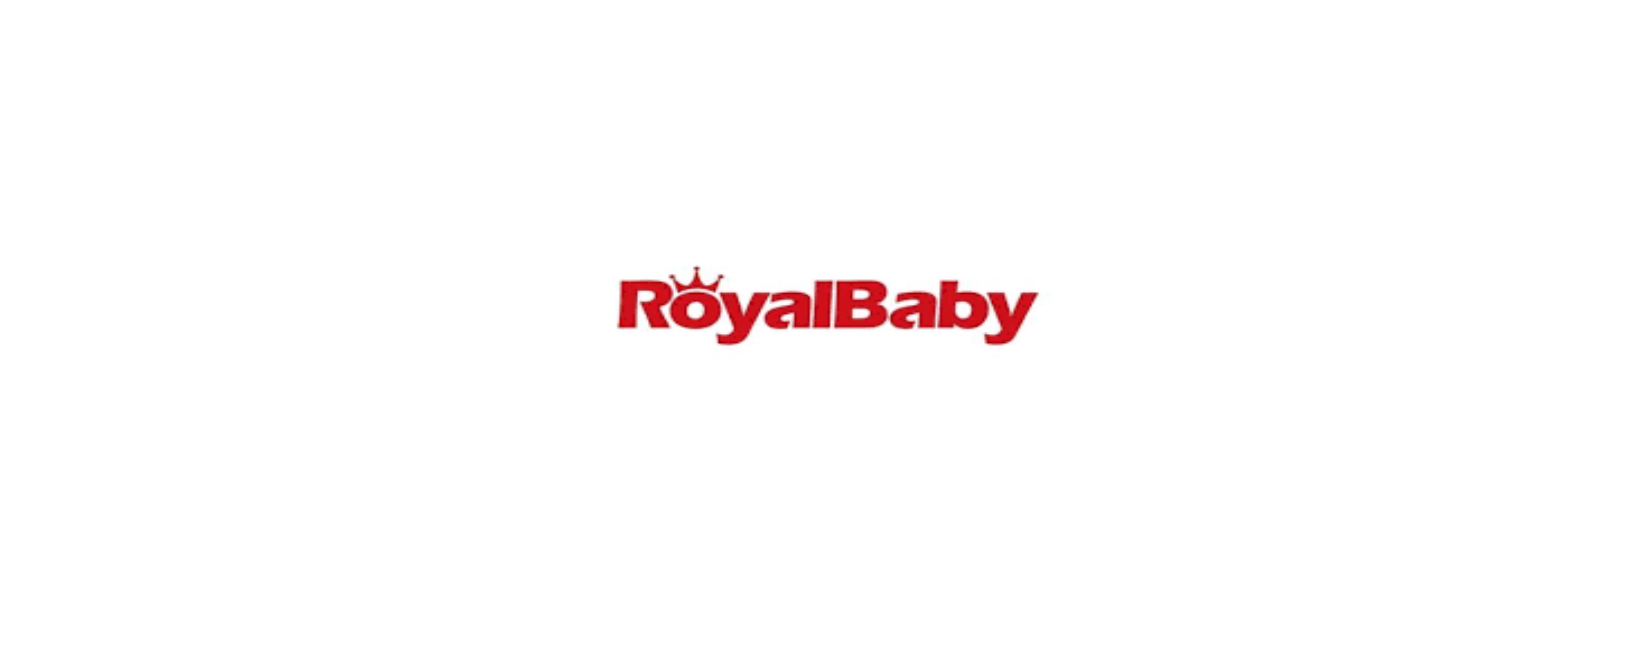 Royalbaby Discount Code 2022